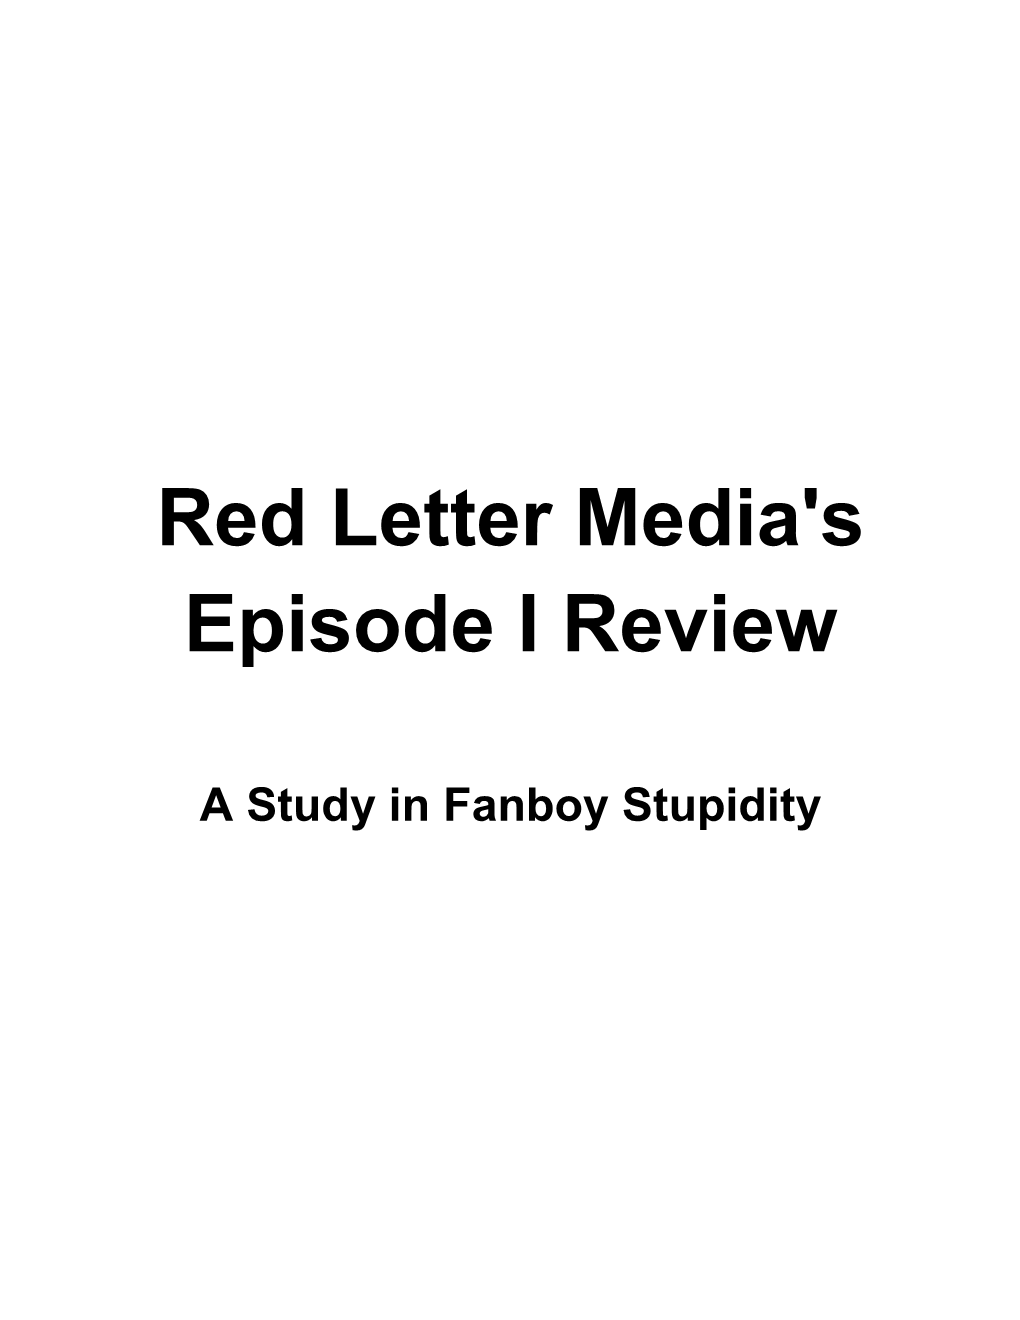 Red Letter Media's Episode I Review